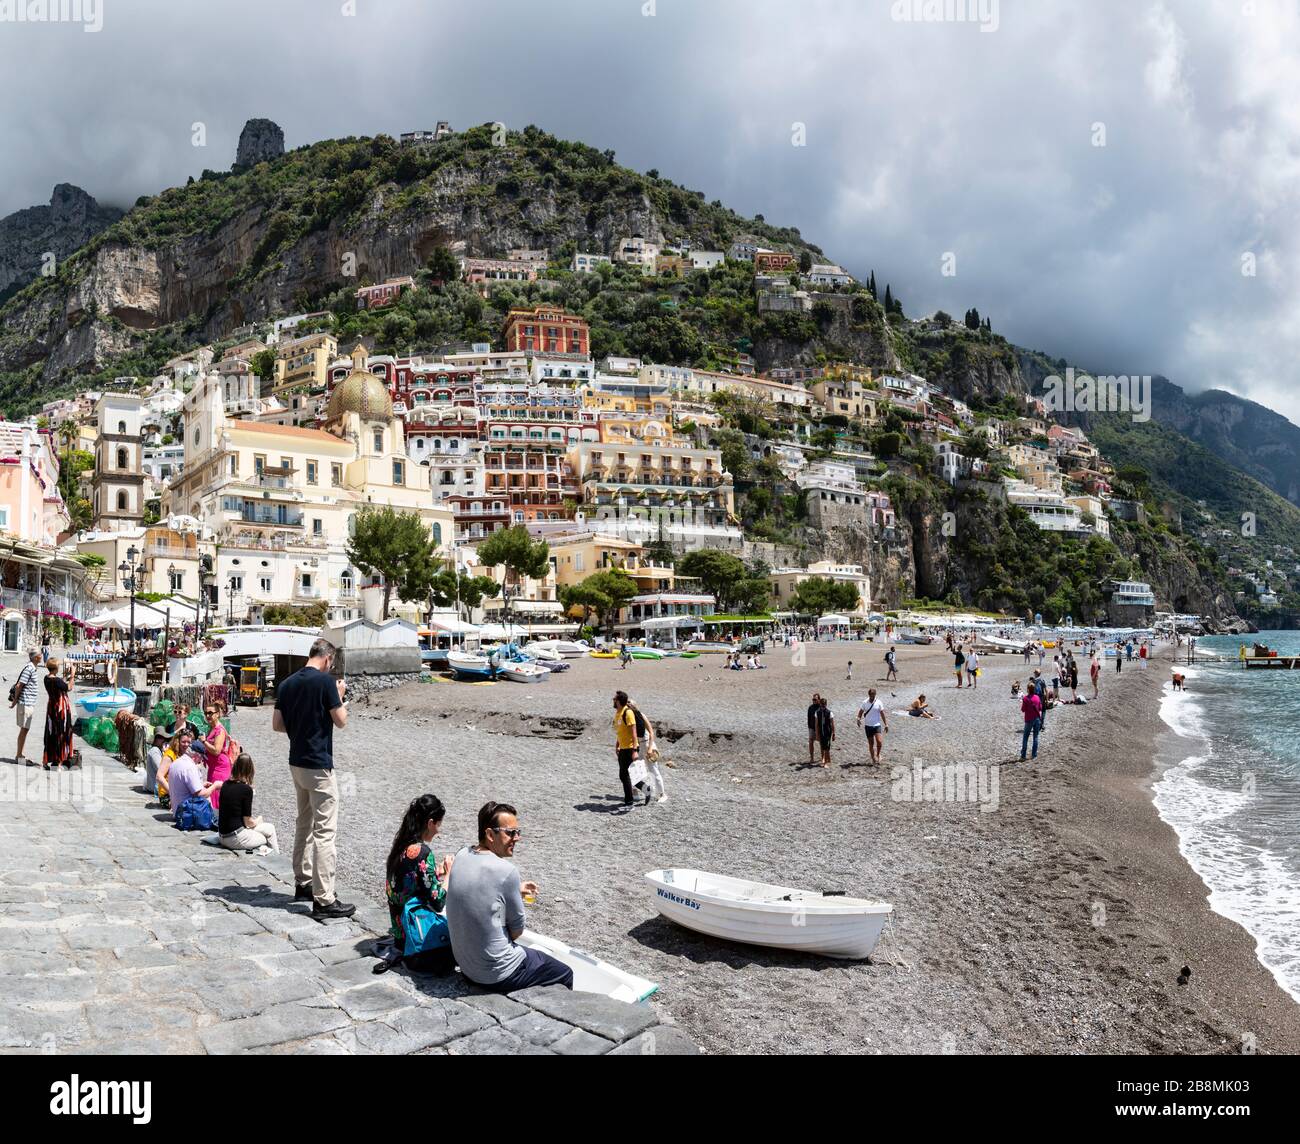 Positano on the Amalfi Coast looking over Spiaggia Grande beach, Campania, Italy. Stock Photo